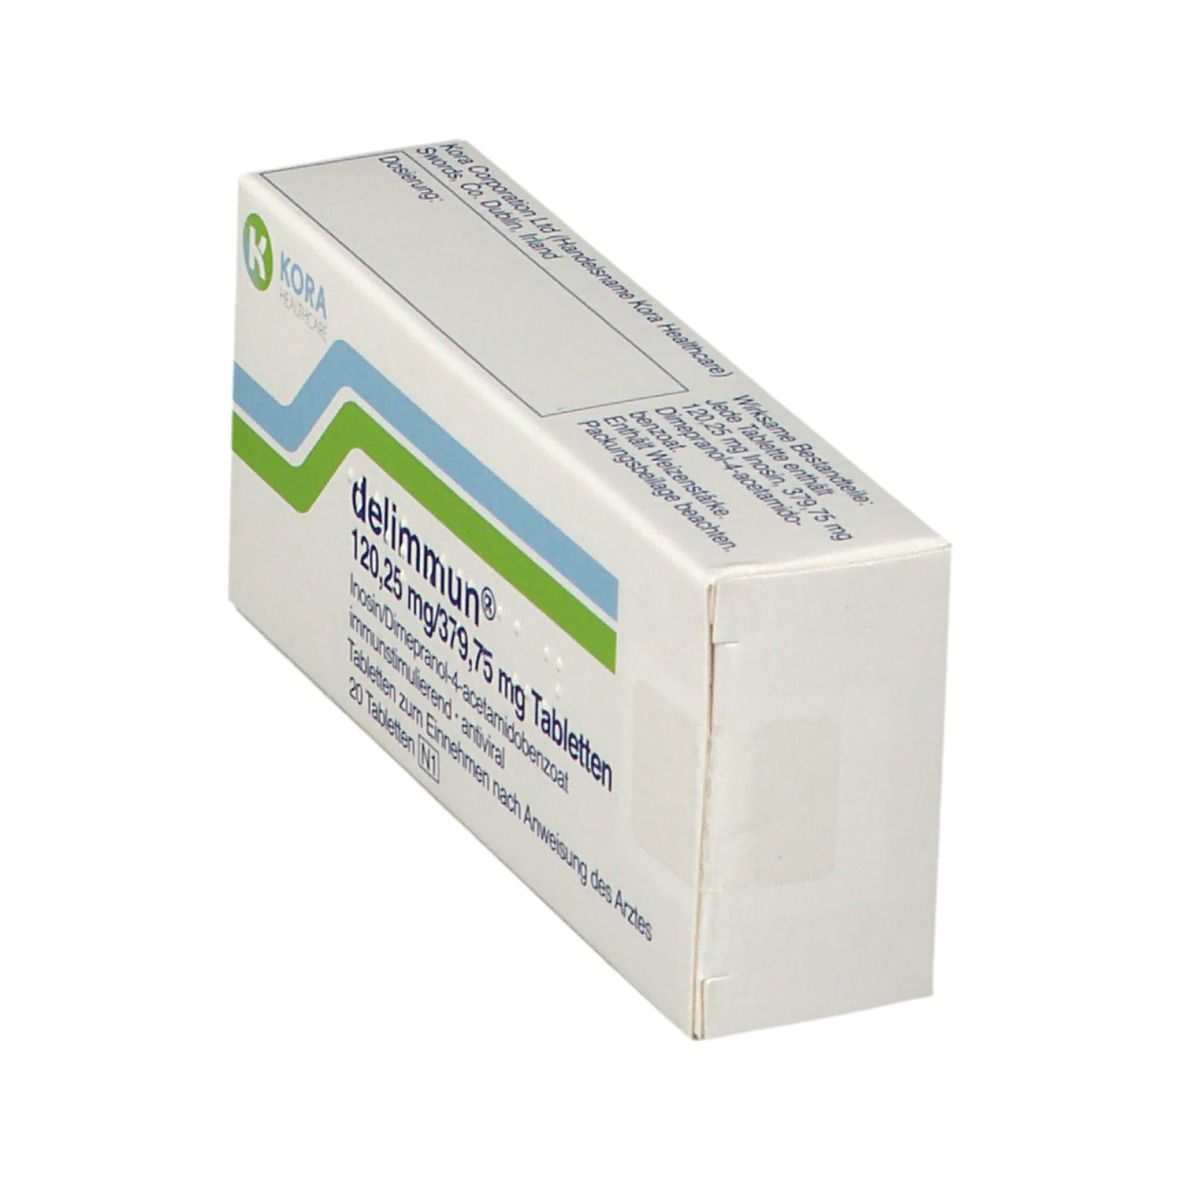 delimmun® 120,25 mg/379,75 mg